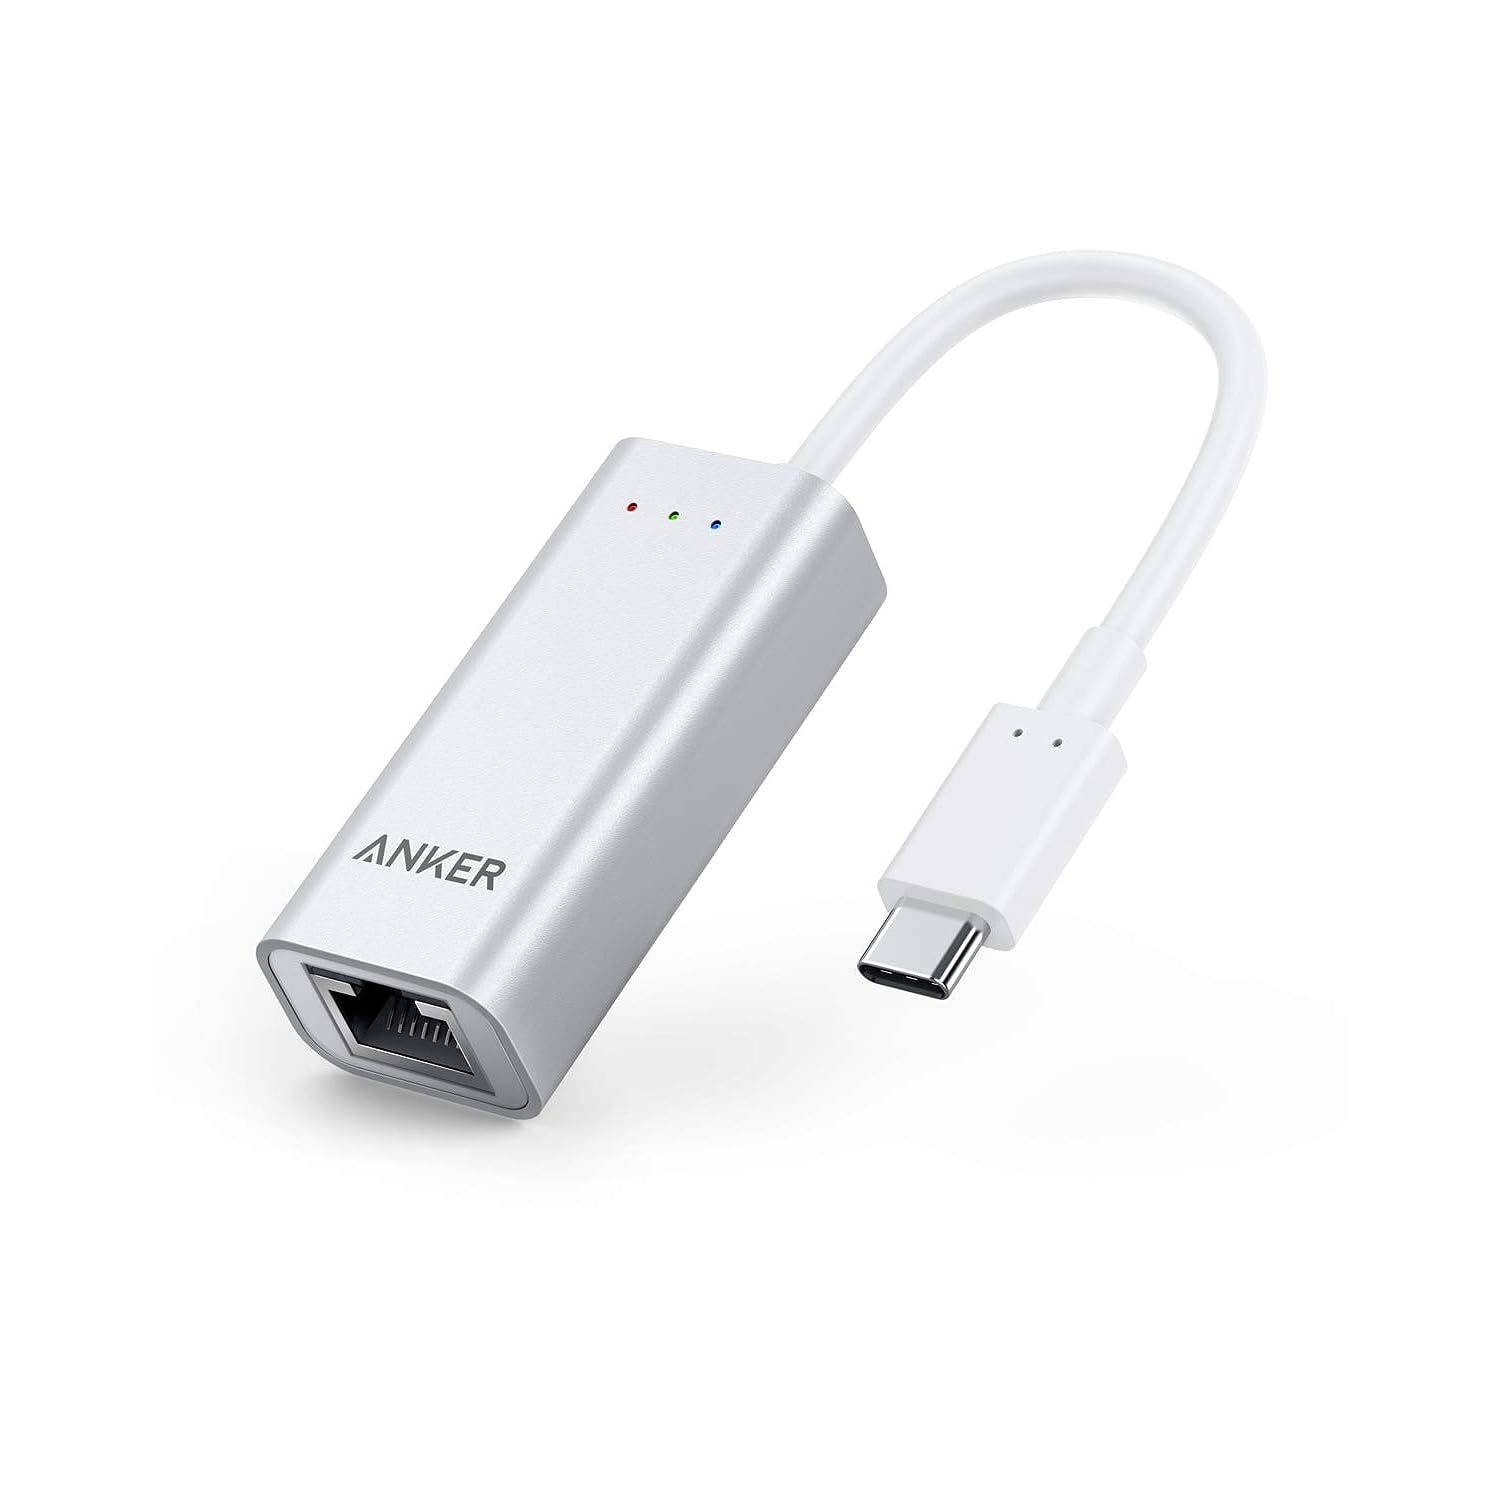 Anker USB C to Gigabit Ethernet Adapter, Aluminum Portable USB C Adapter, for Ma - $42.99